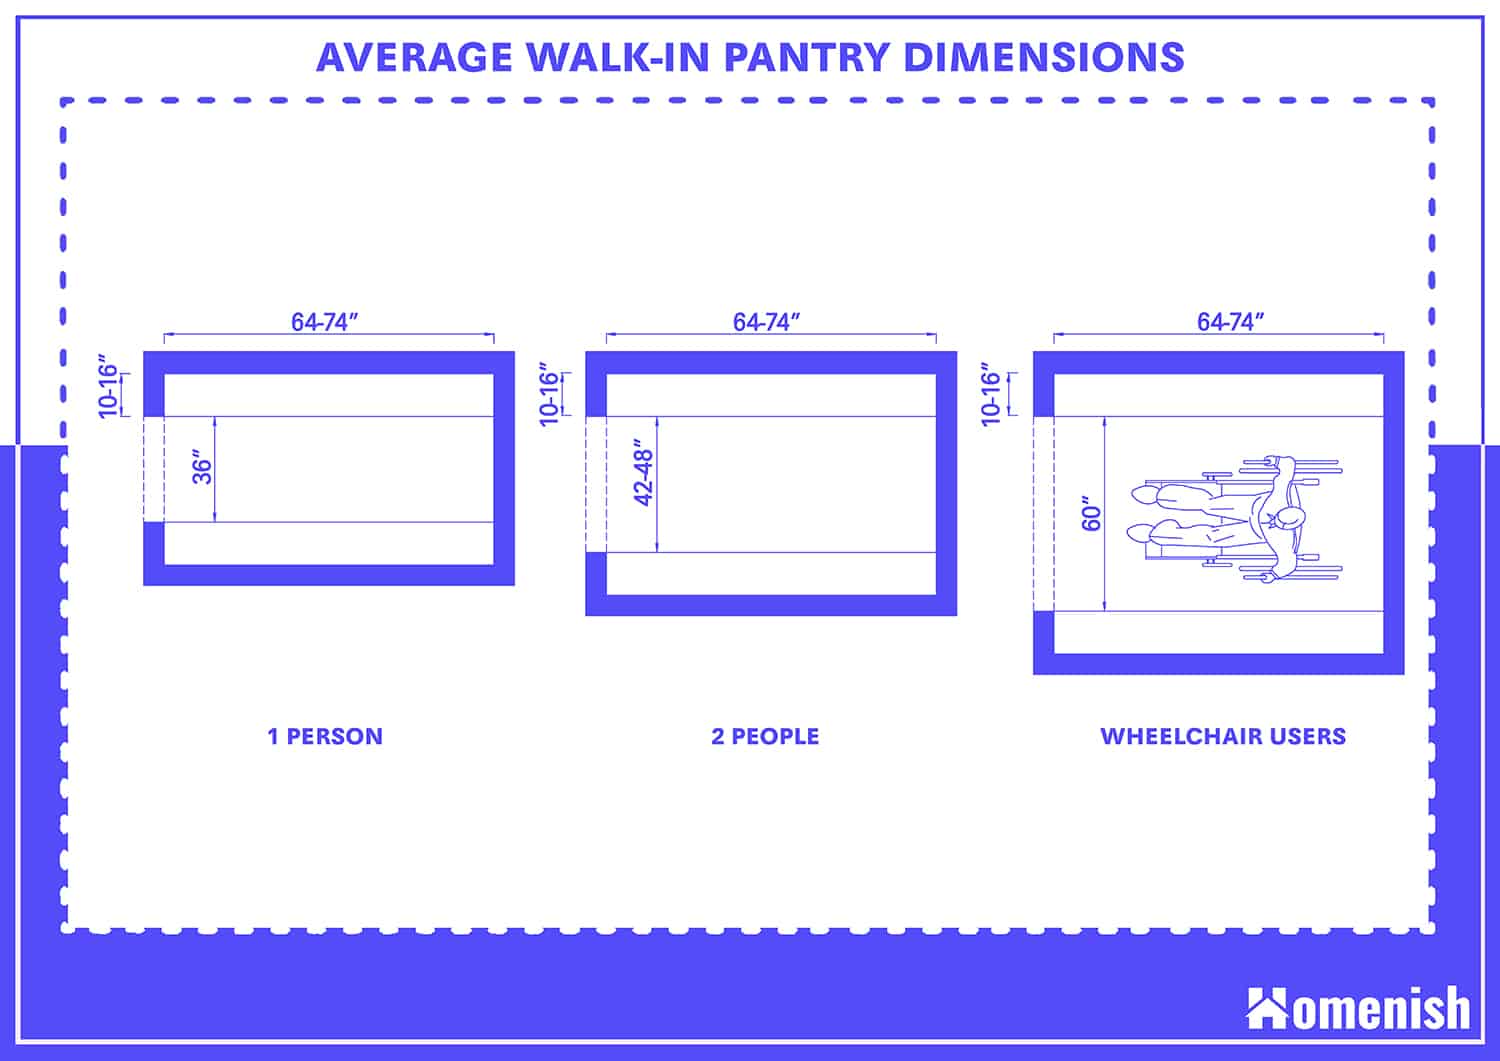 Average Walk-in Pantry Dimensions